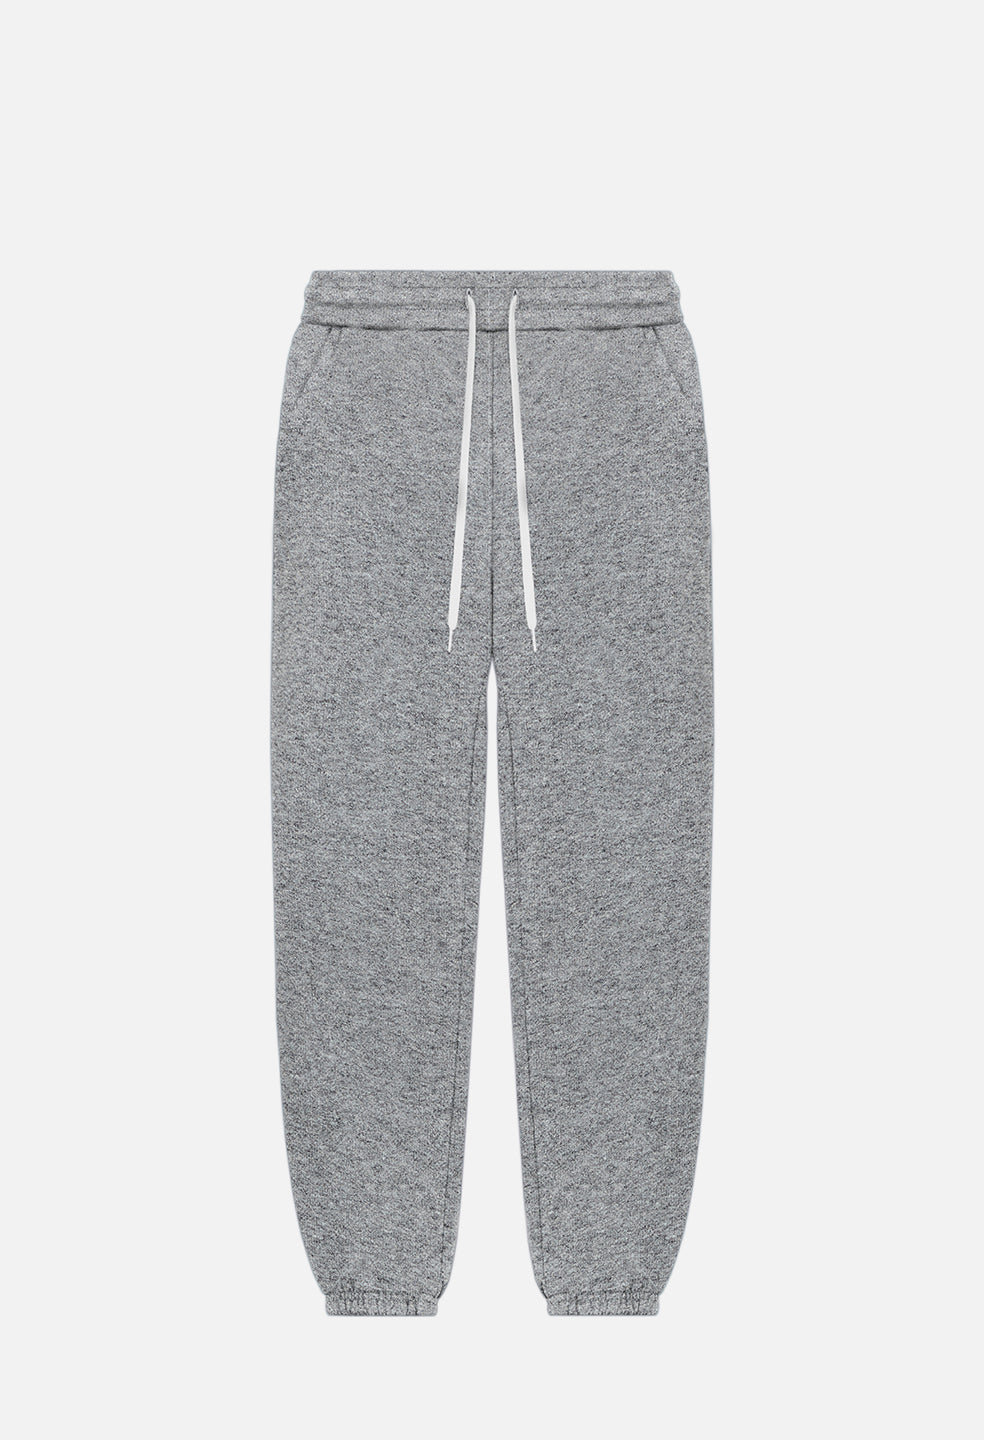 LA Sweatpants / Dark Grey